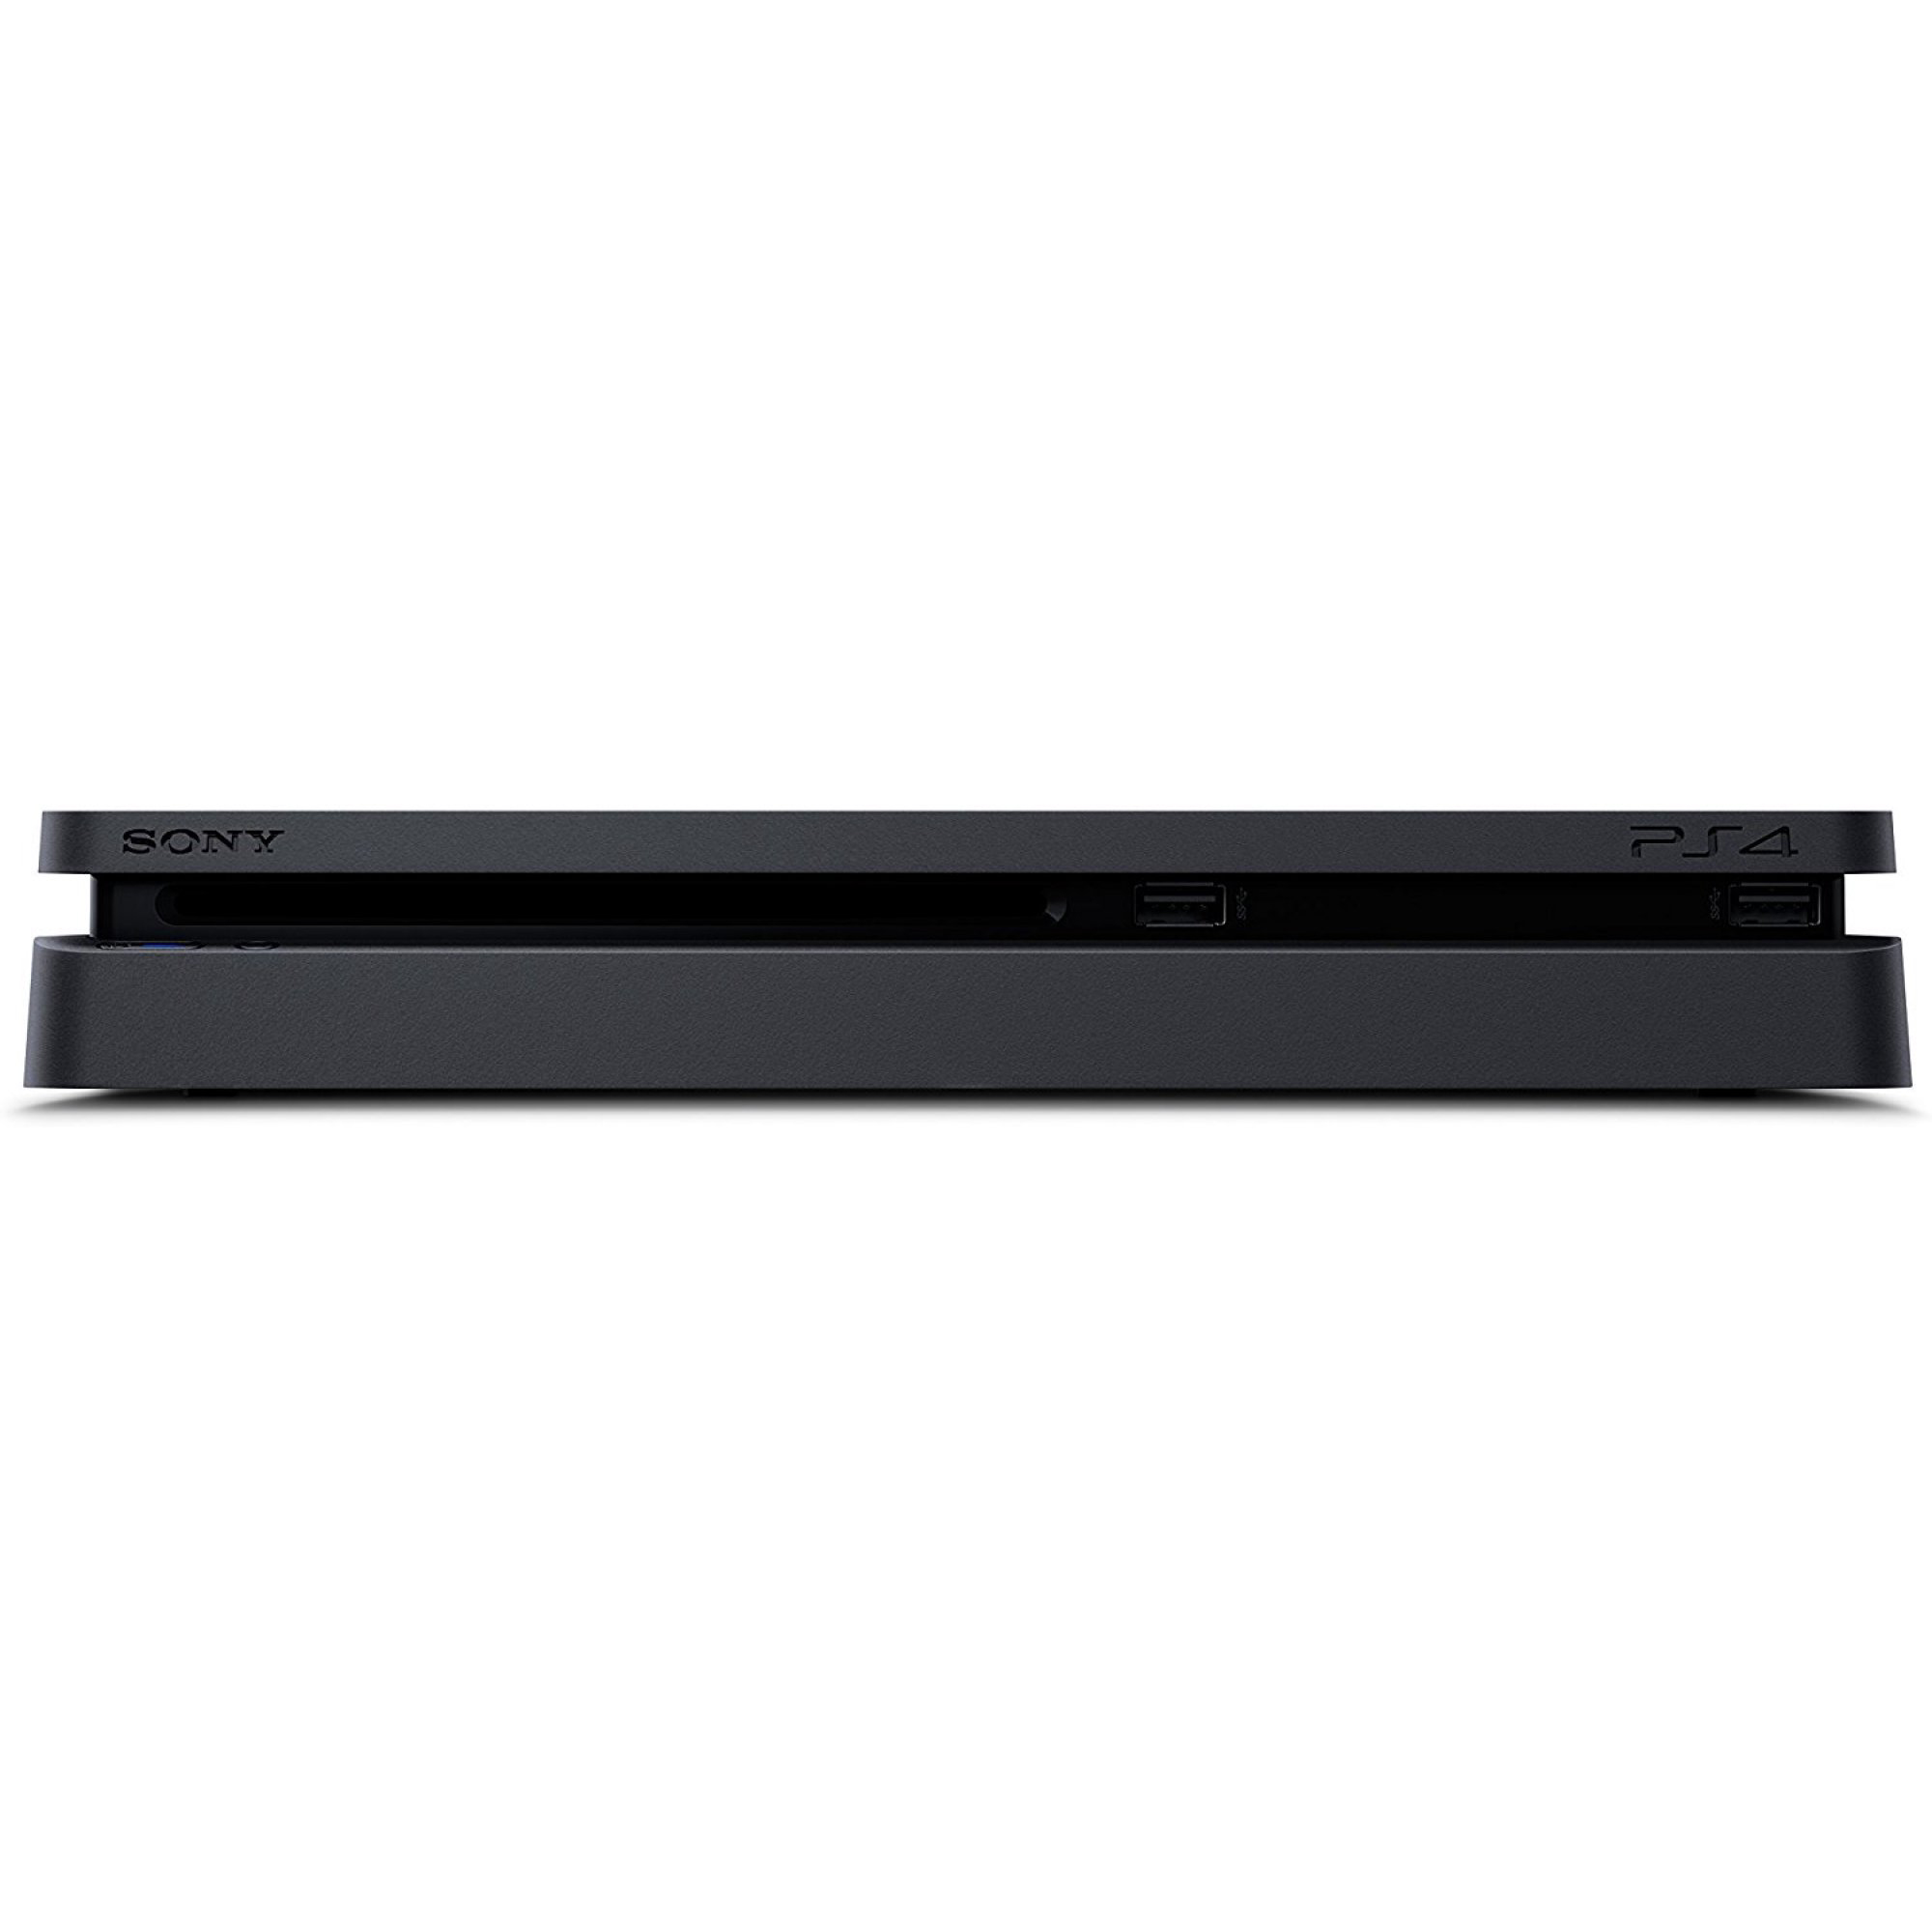 Sony PlayStation 4 Slim 1TB Gaming Console, Black, CUH-2115B - image 5 of 9